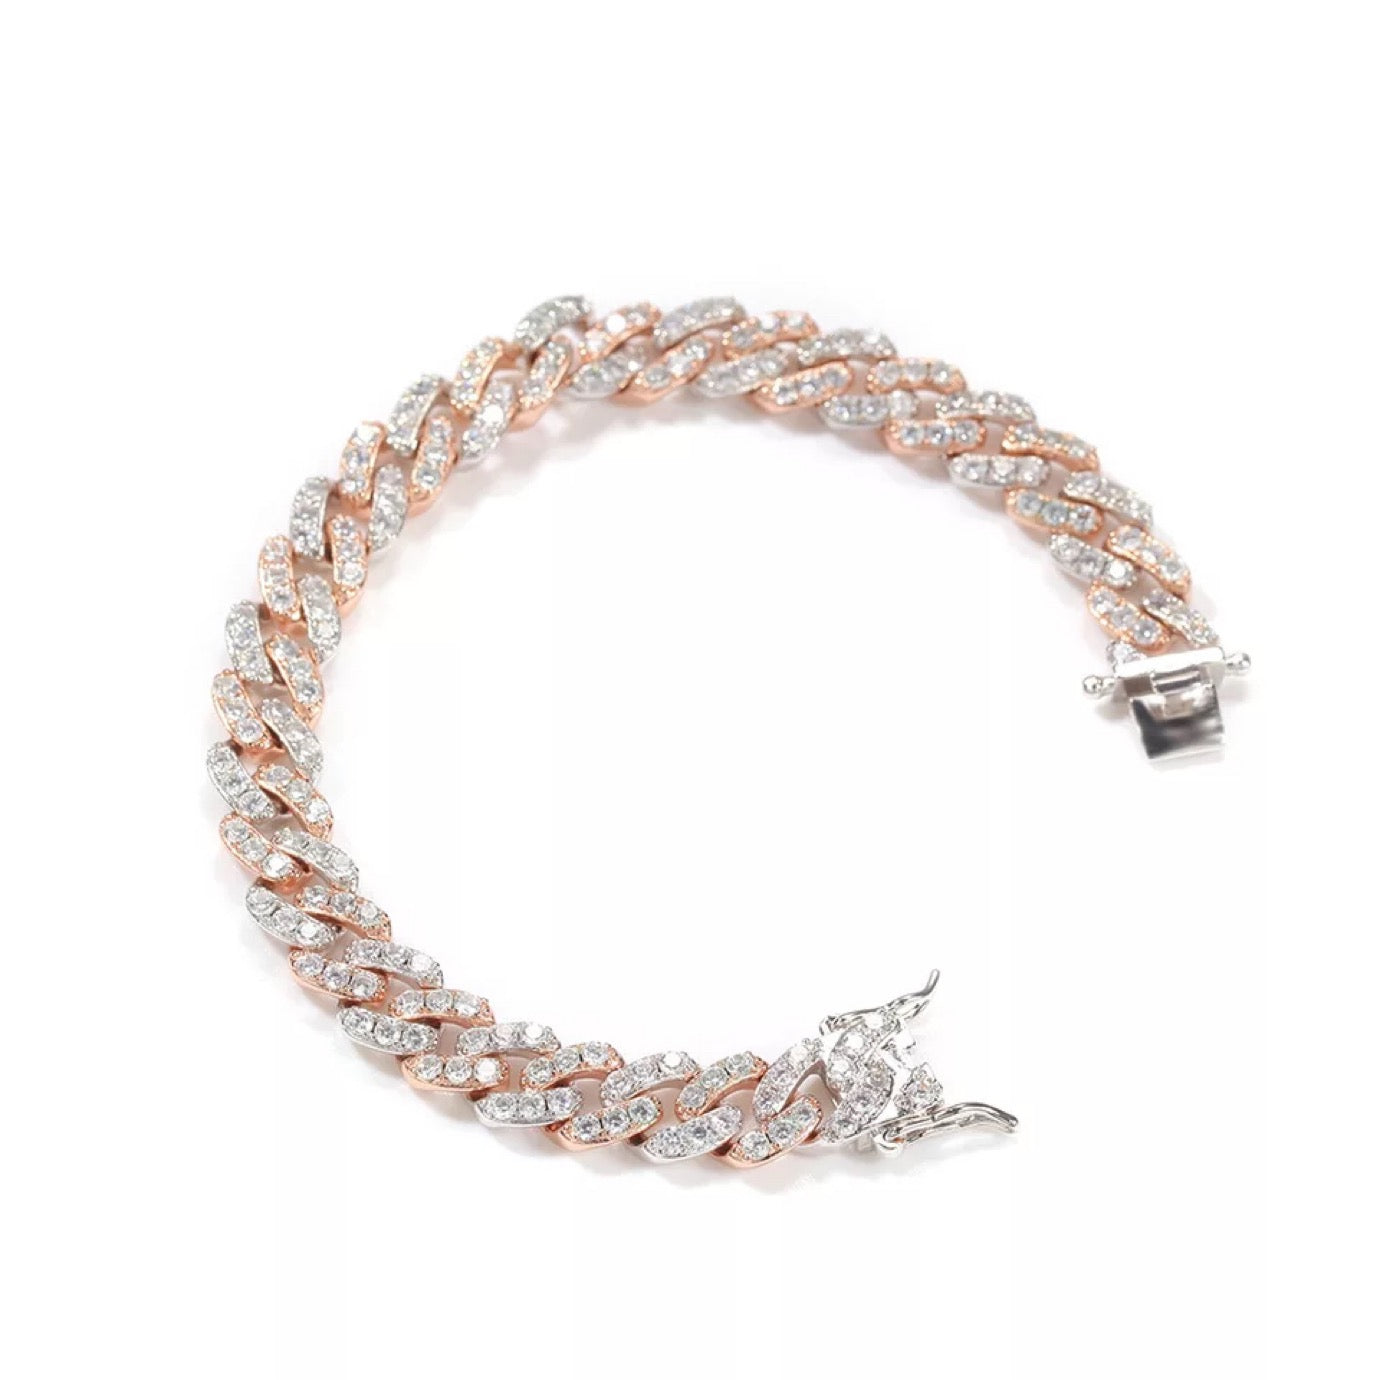 2pcs/lot 6-20 inch Clear CZ Paved Cuban Bracelet/Anklet/Necklace Cuban Chains Charms Beads Beyond